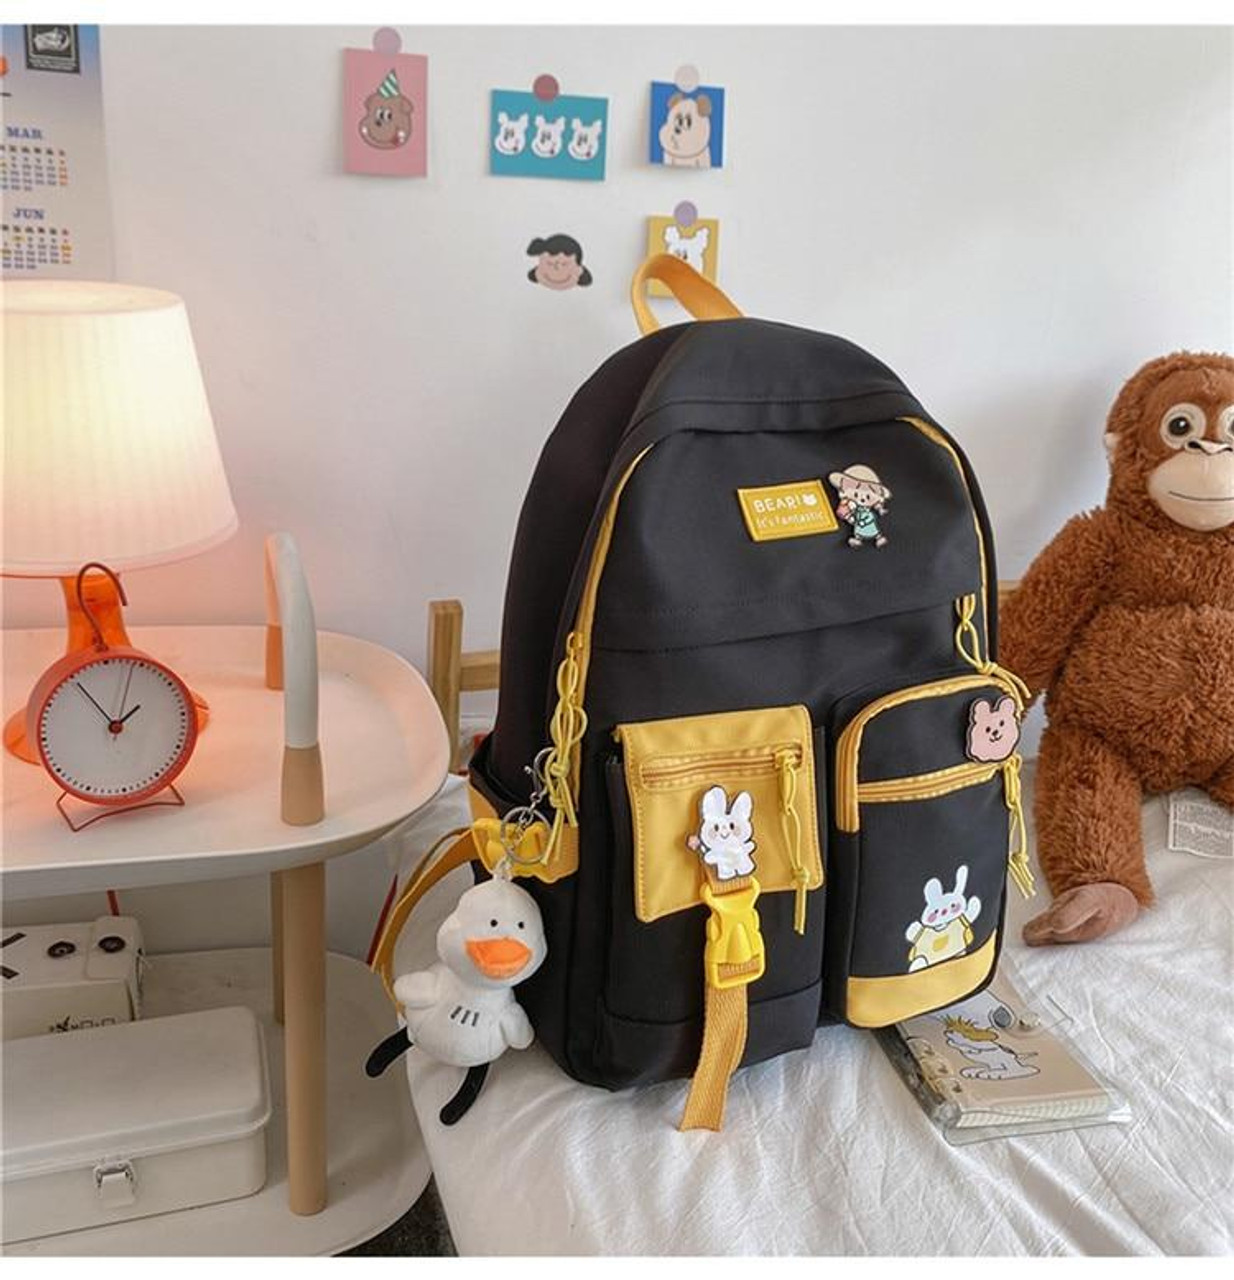 Duck Design Cute School Backpack